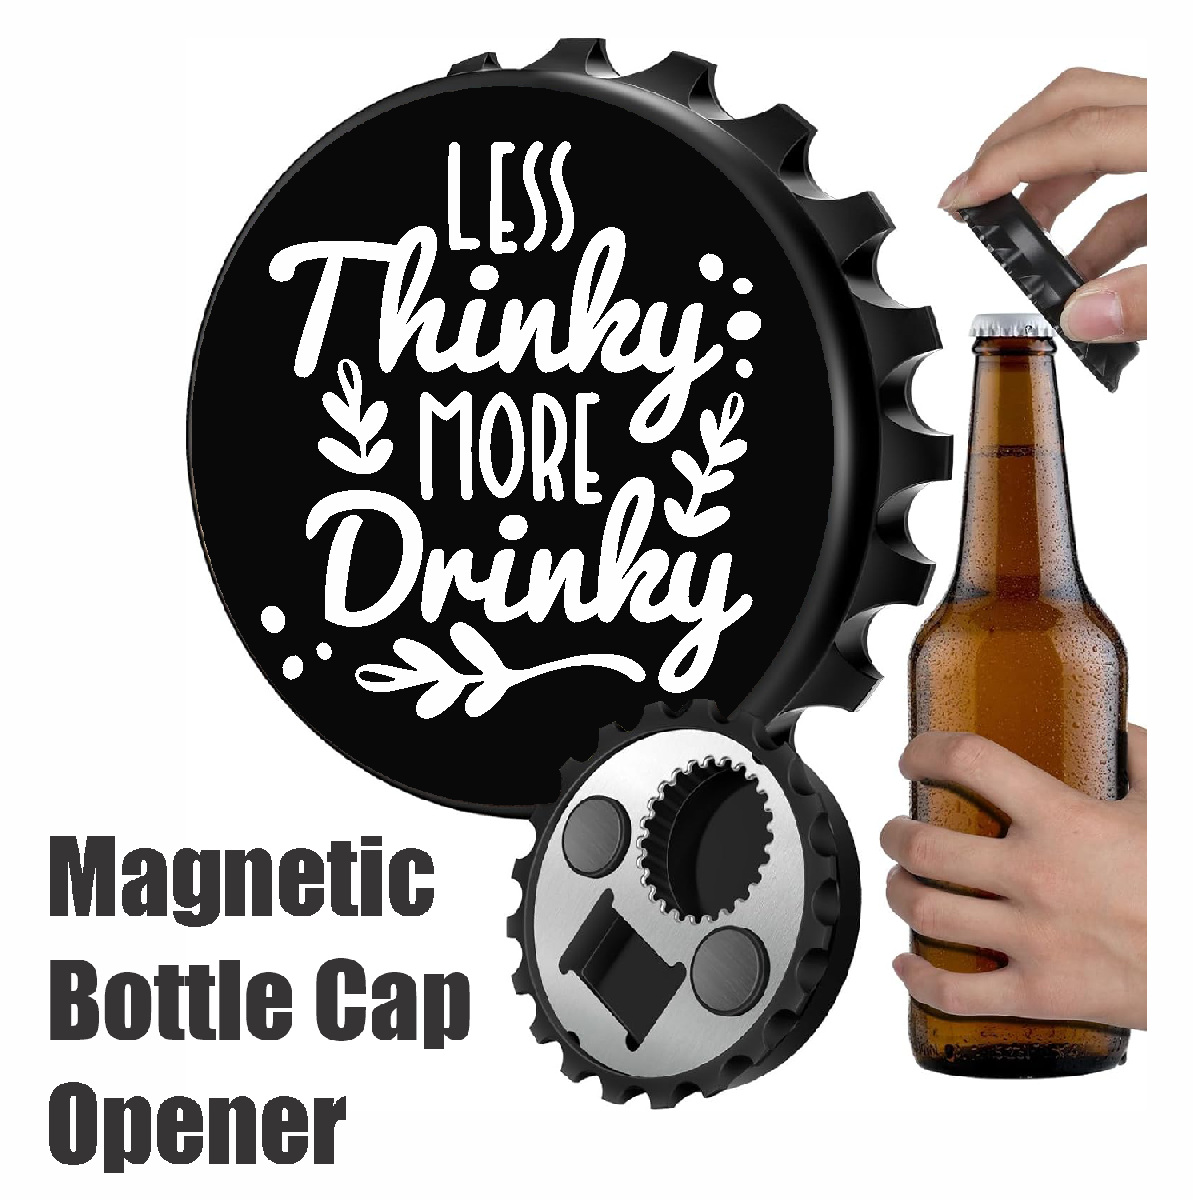 Less Thinky, More Drinky - Designer Beer Bottle Opener Magnet for Refrigerator, Gifts for Beer Lovers, Black